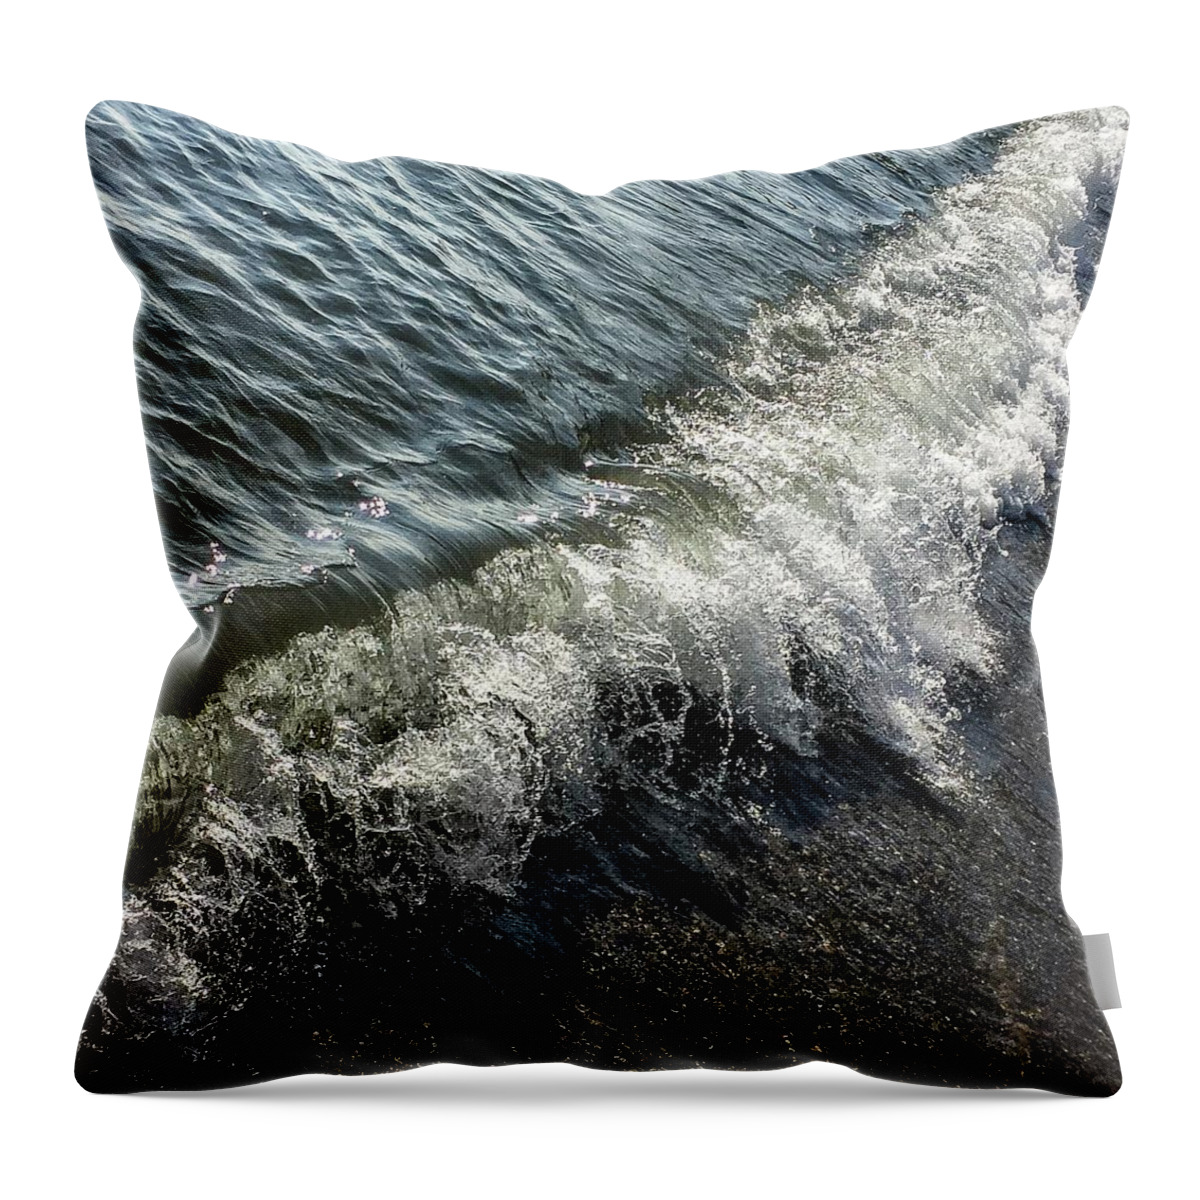 Lake Throw Pillow featuring the photograph Lap by Terri Hart-Ellis